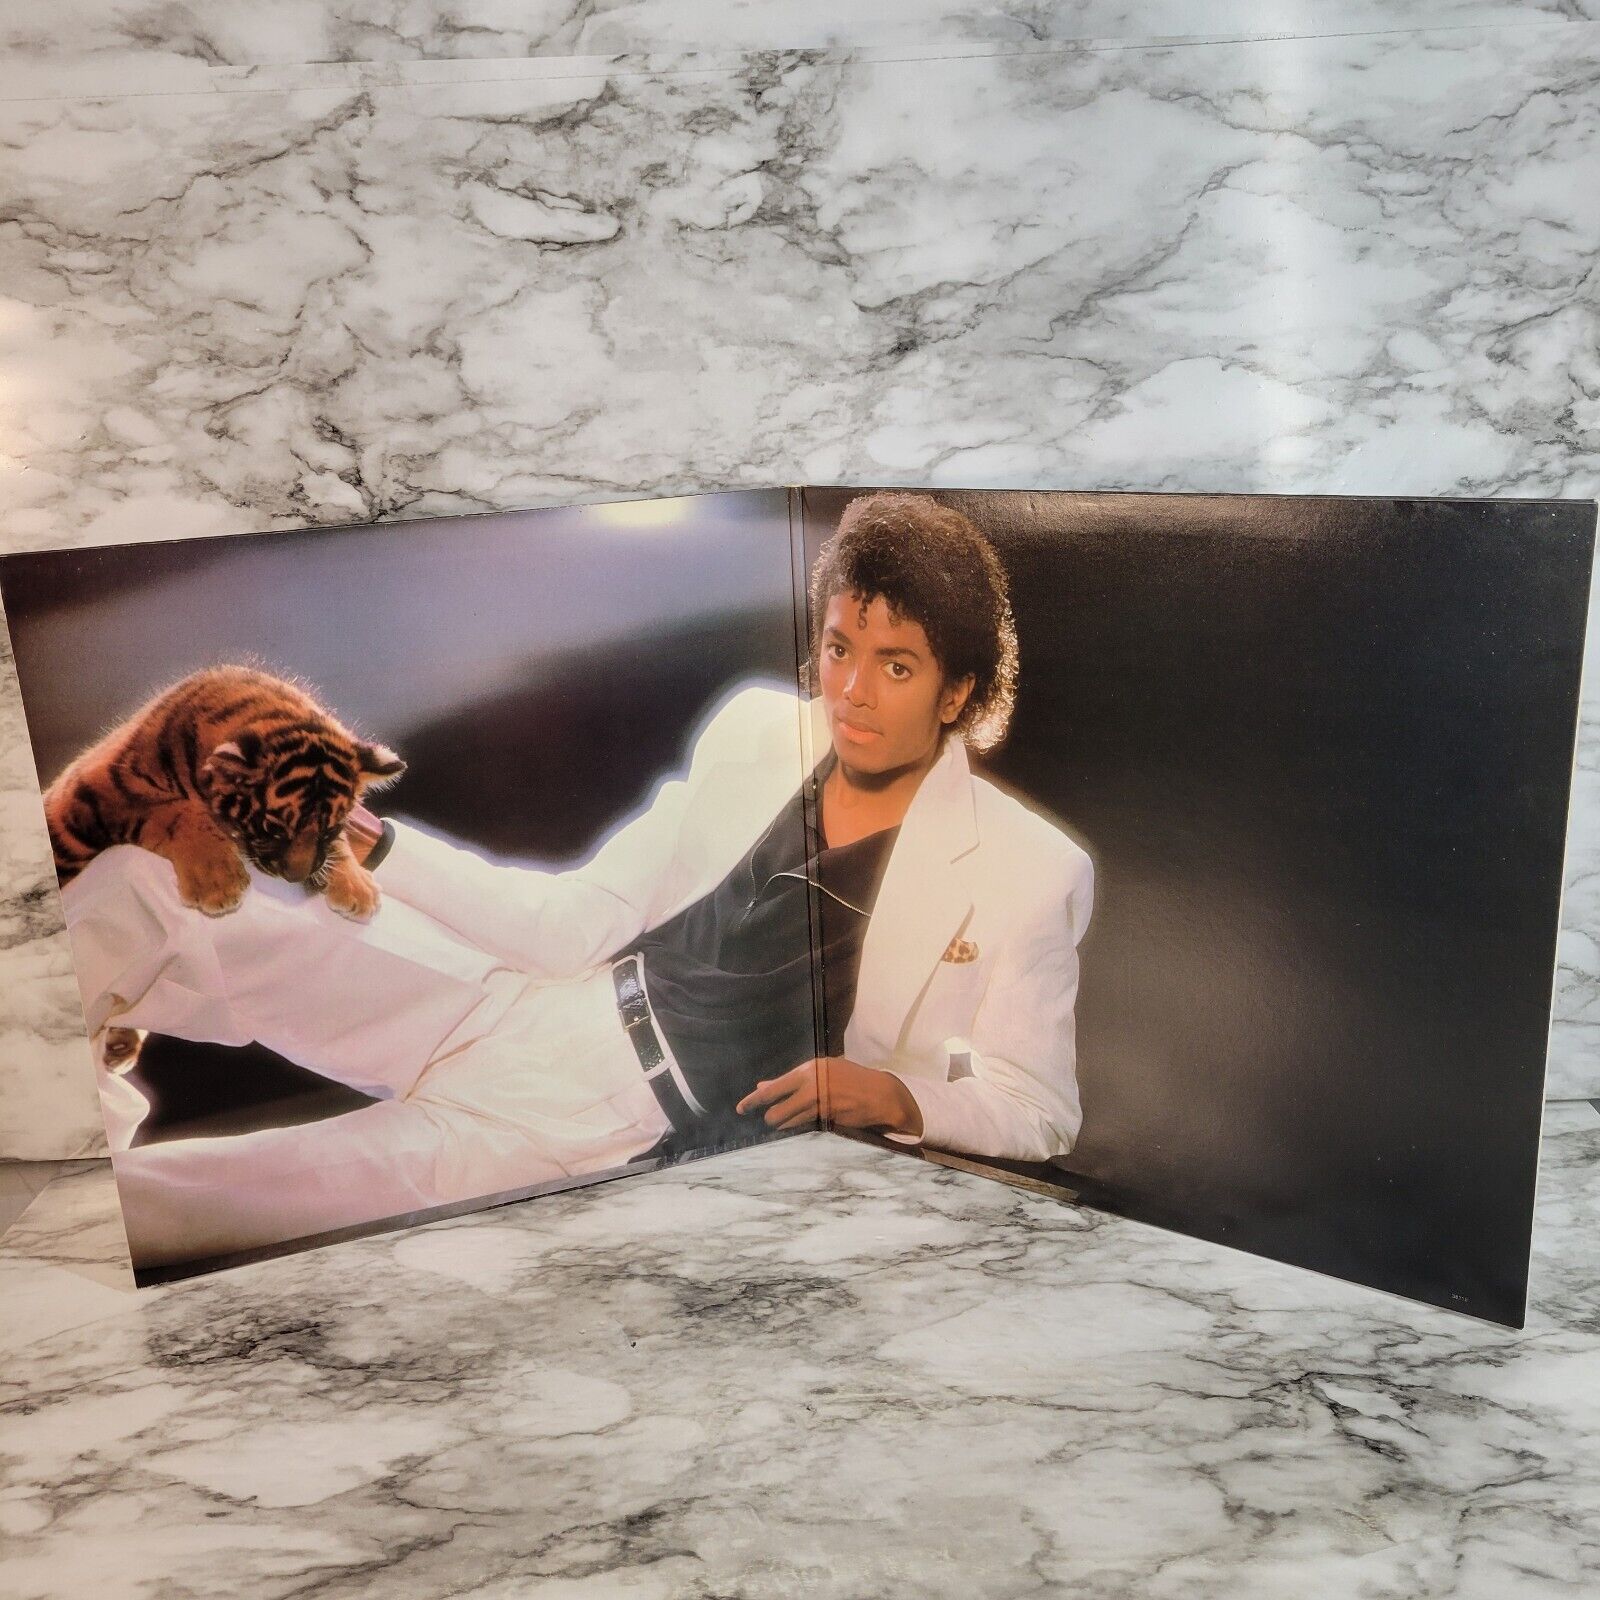 Michael Jackson,Thriller - 1982 LP - Vinyl  QE38112 Gatefold Epic Records 1982